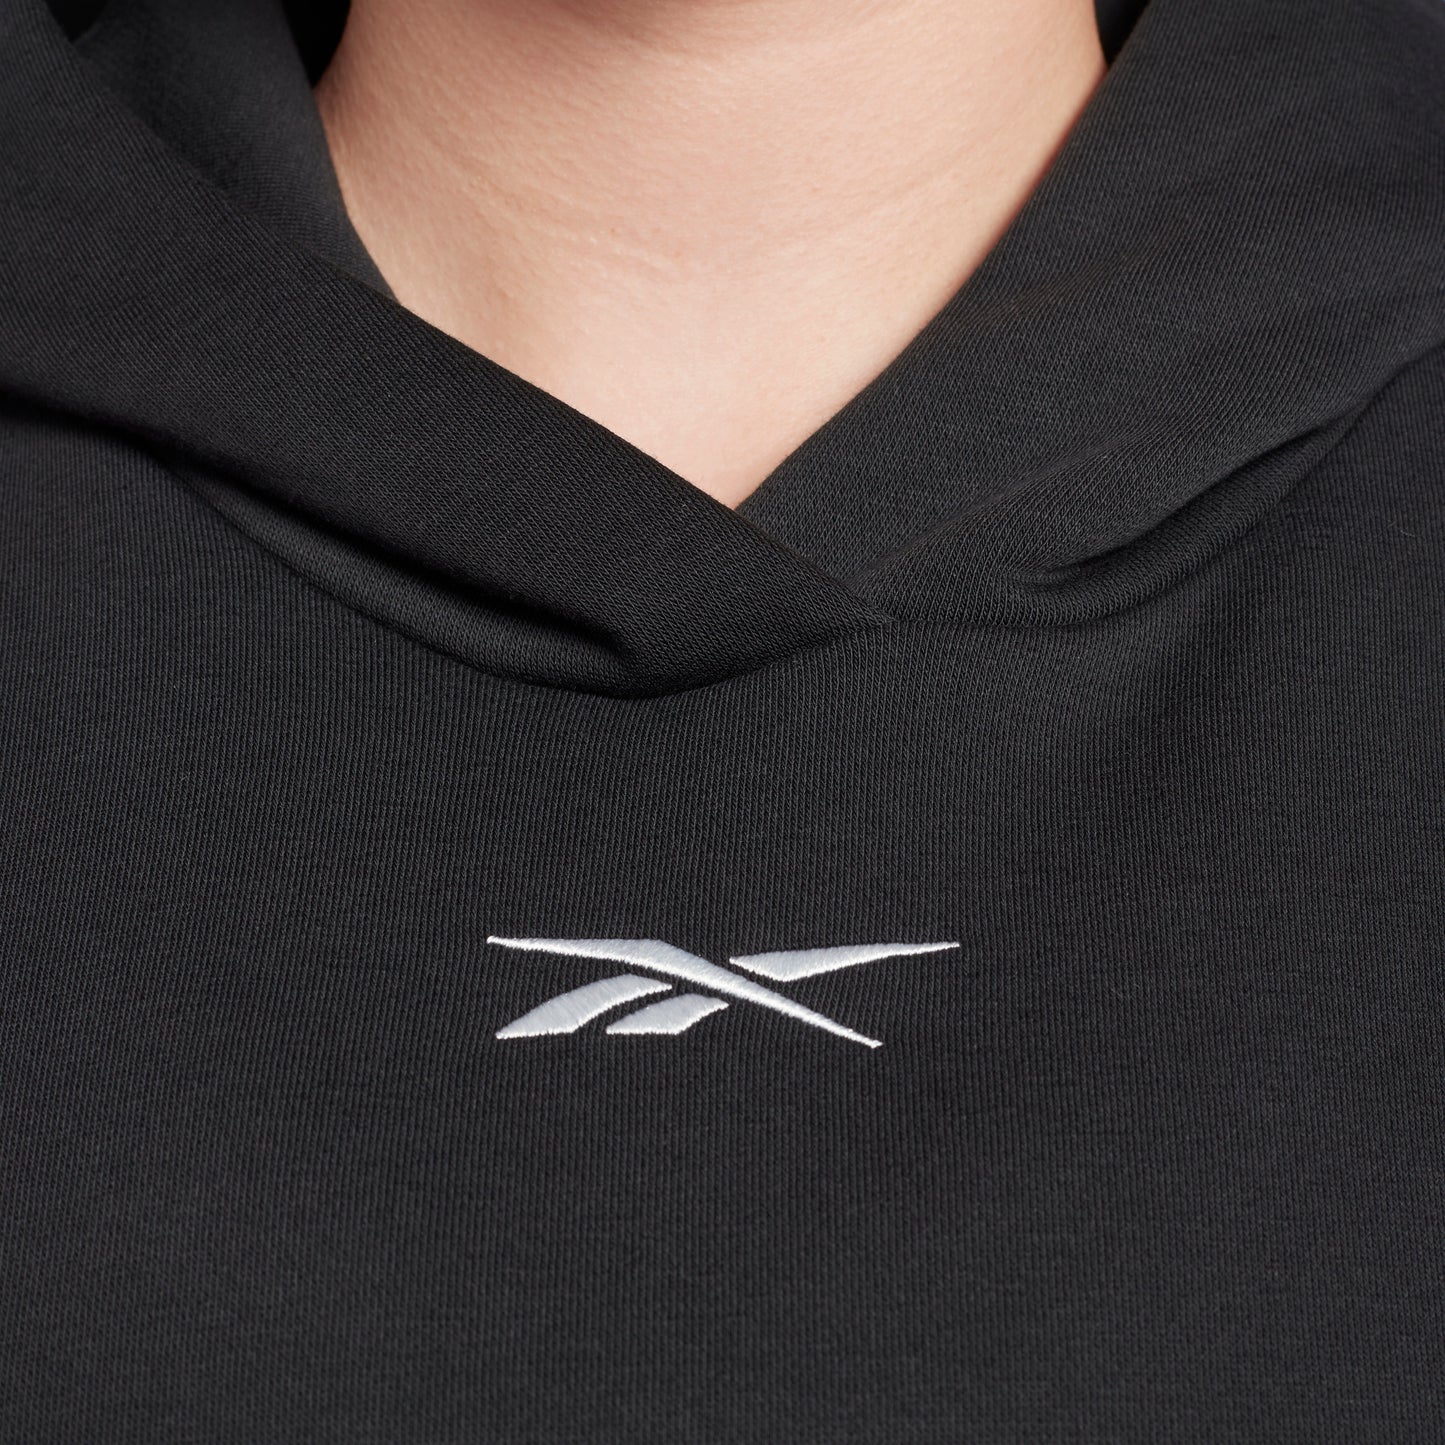 Hot Leathers® 1494 - Women's Hooded Sweatshirt (2X-Large, Black) 